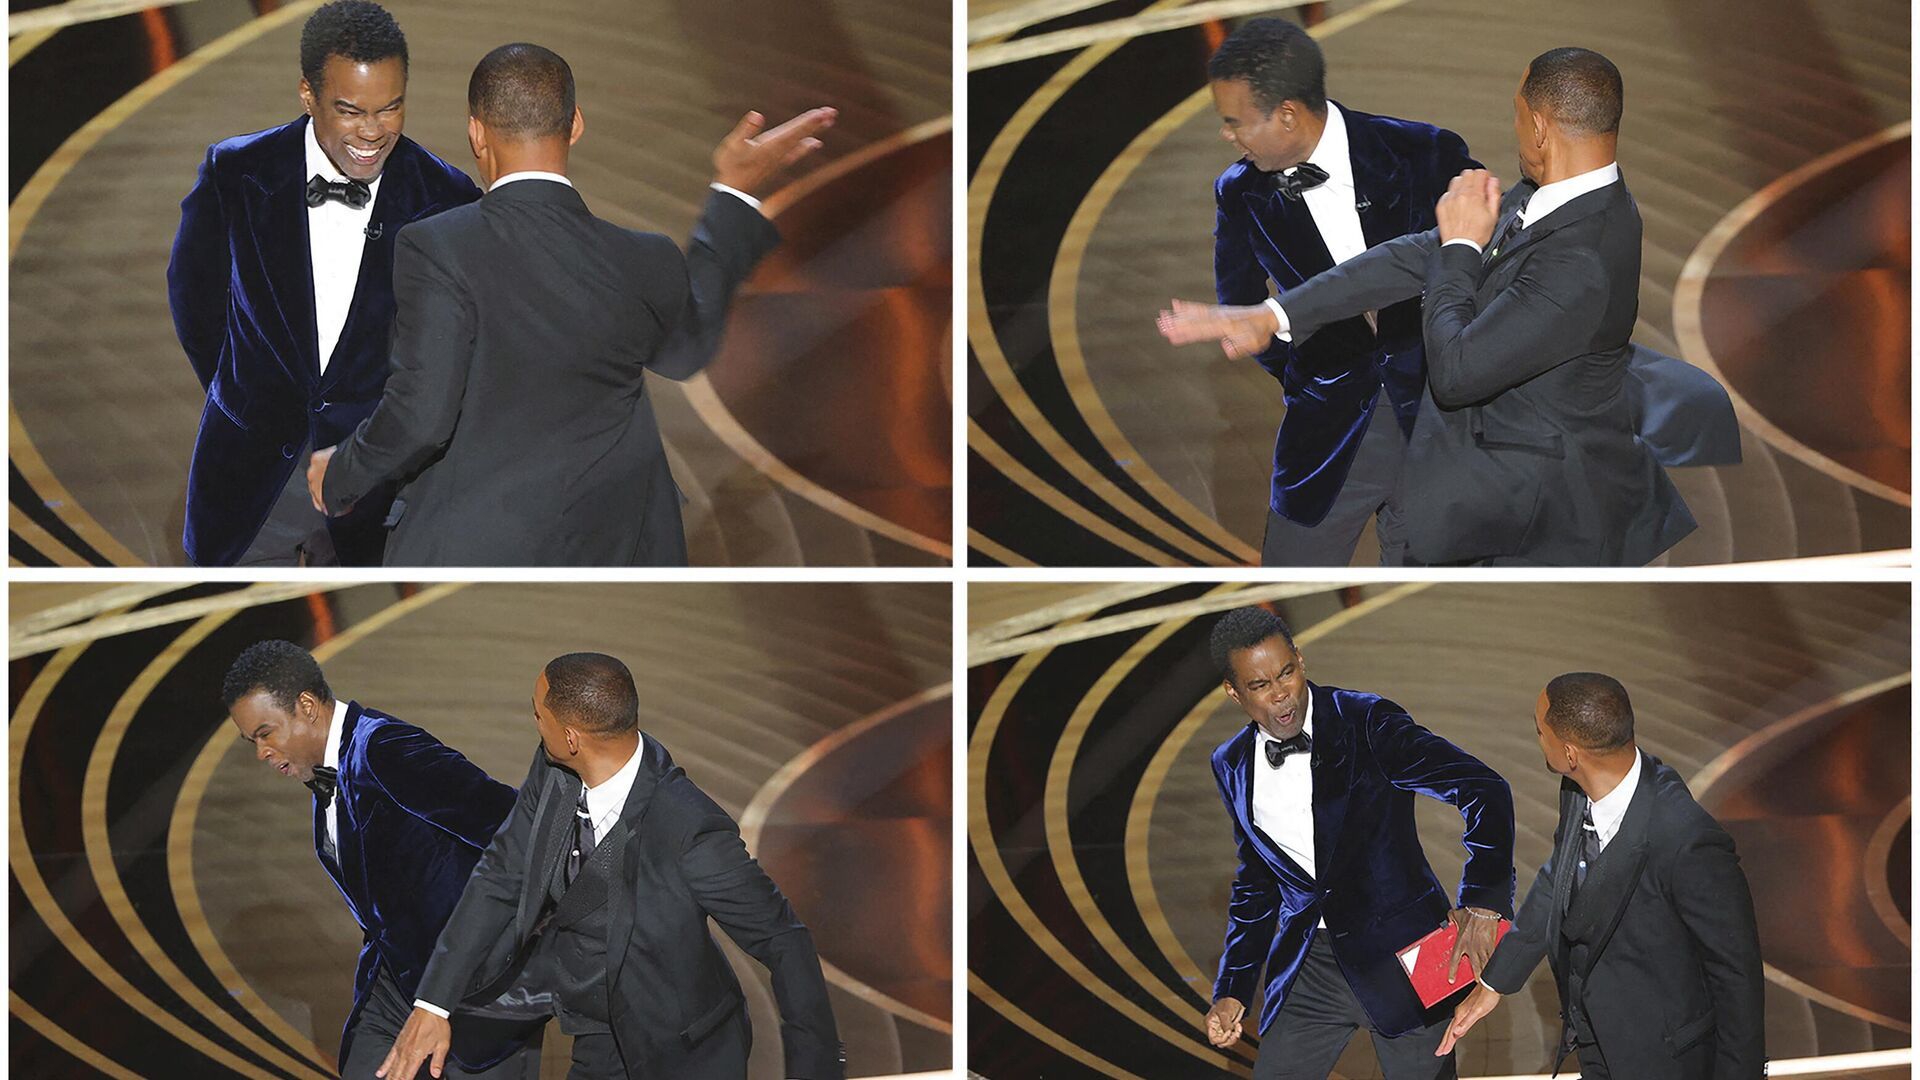 Уилл Смит ударил Криса Рока во время церемонии «Оскара»